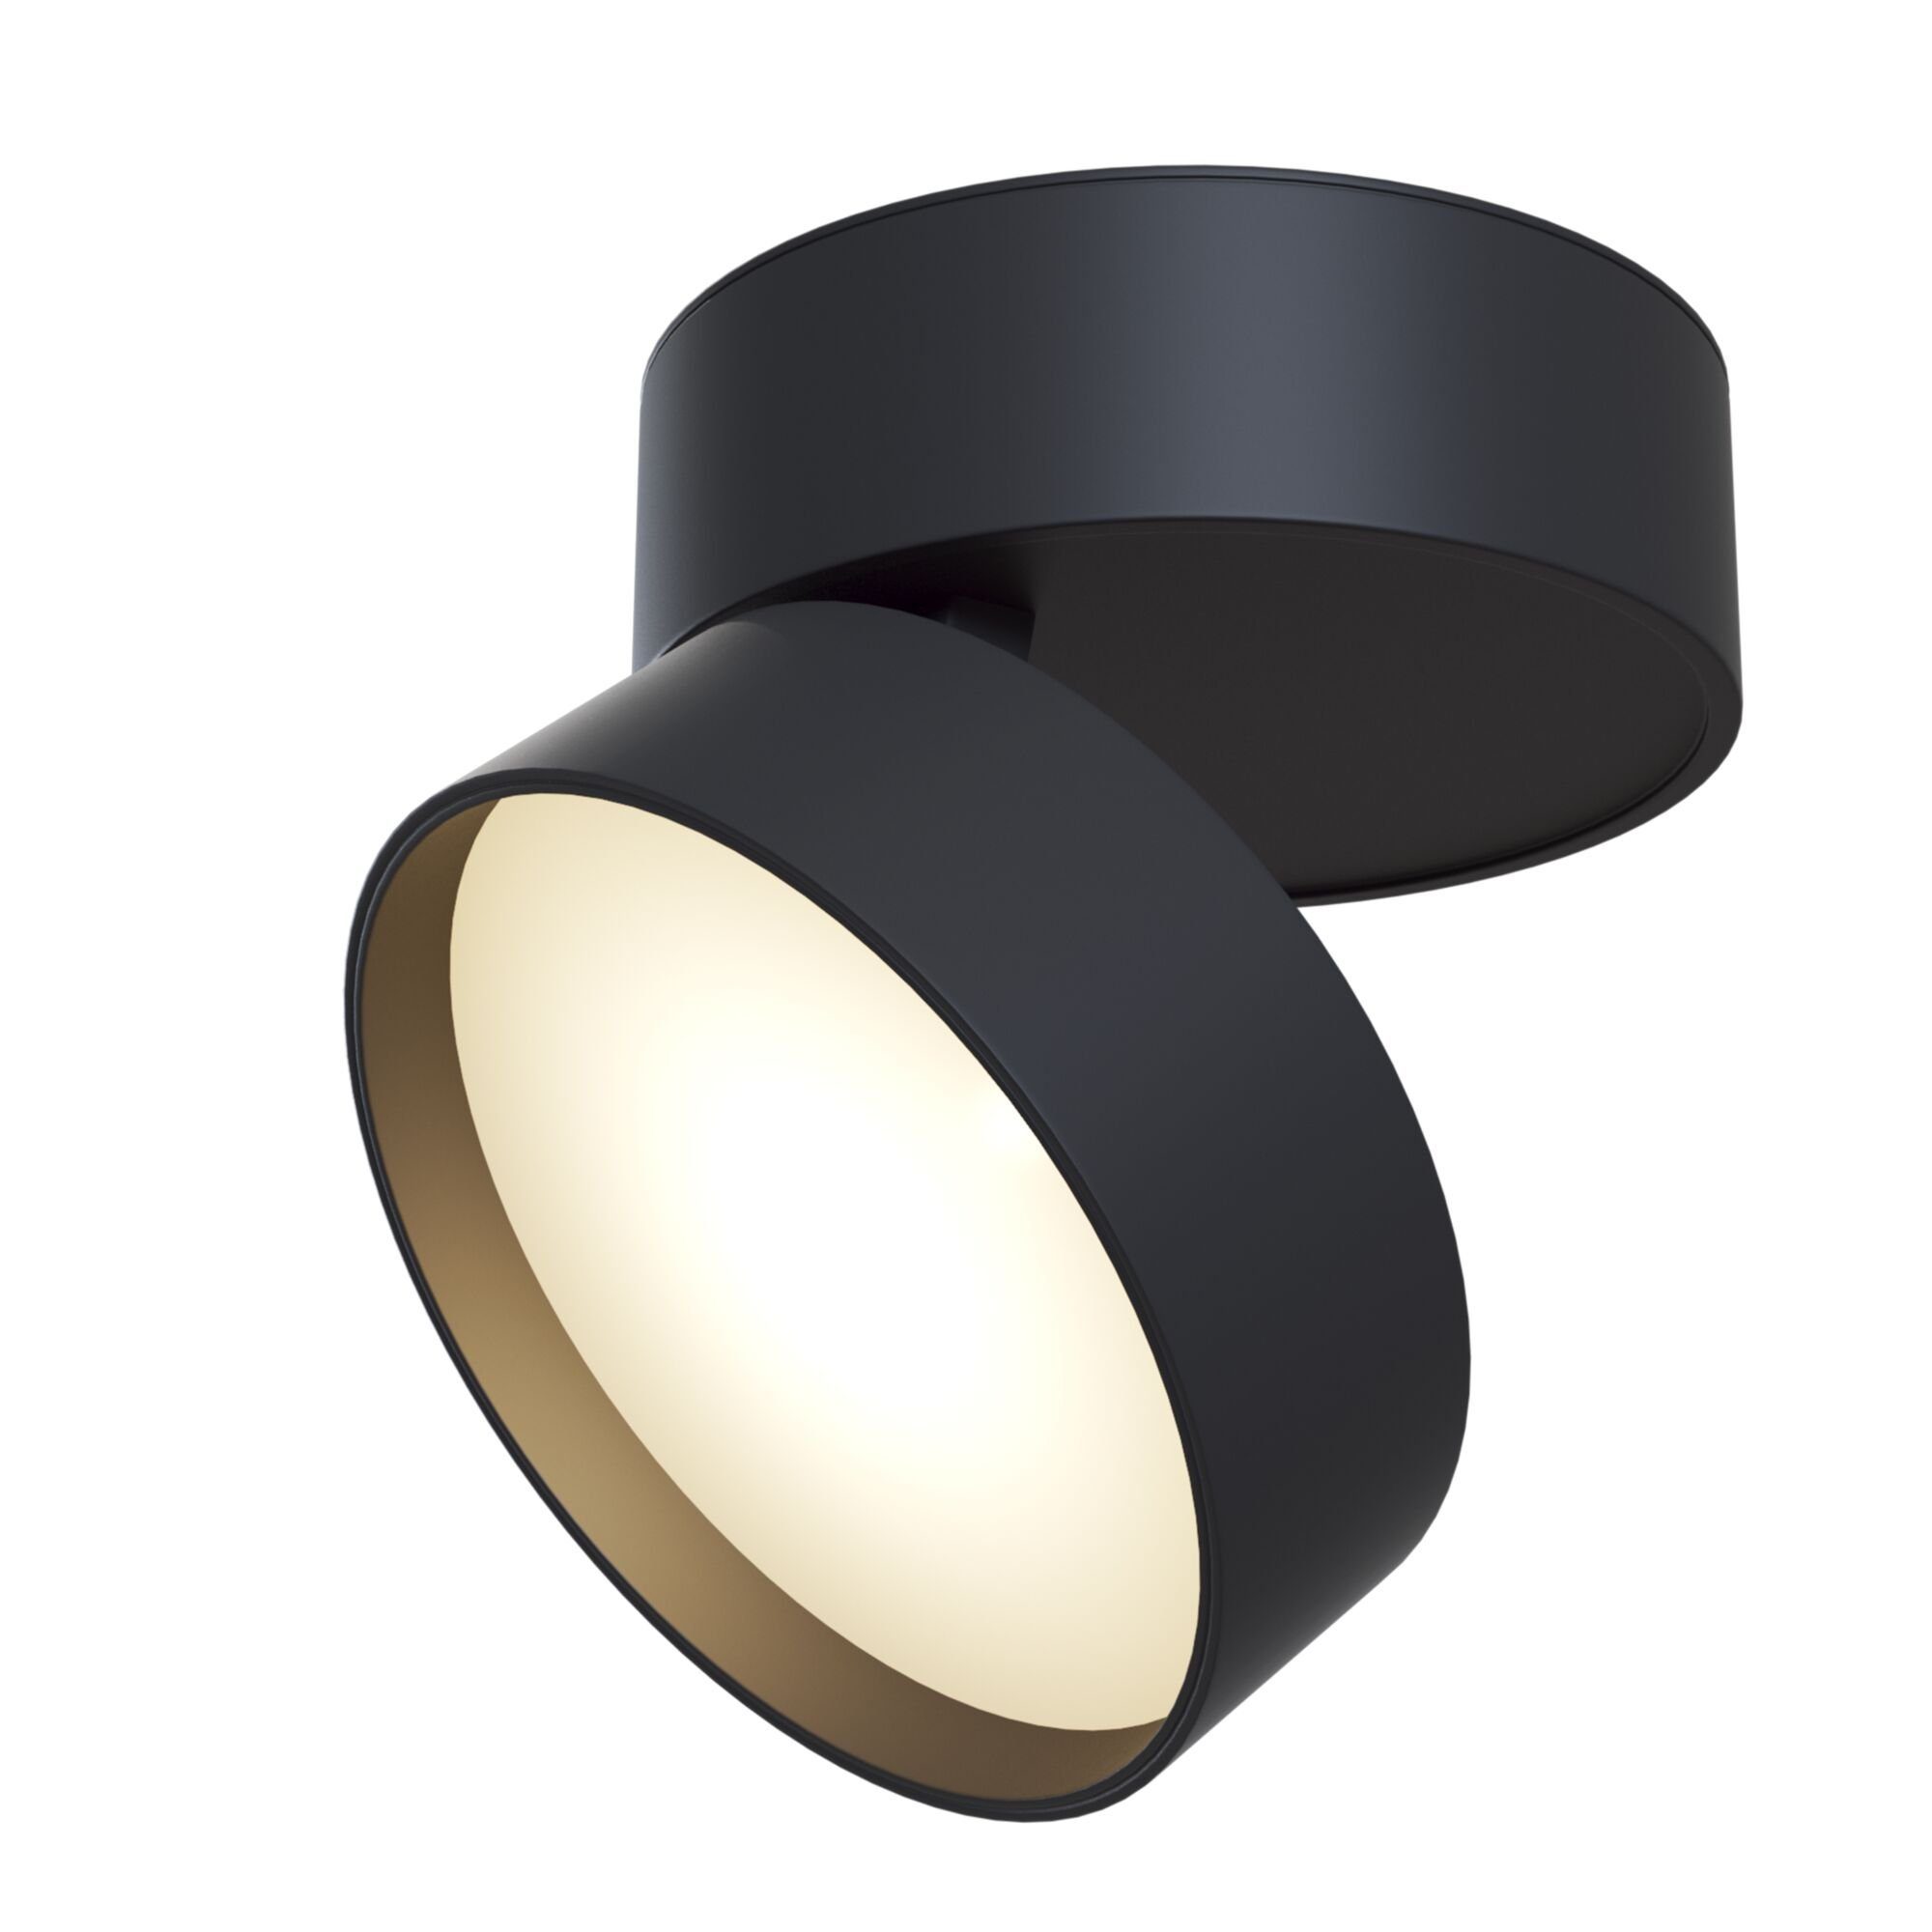 LIGHTING Deckenleuchte 2 hochwertige Lampe LED DECORATIVE Onda fest cm, 12x8.2x12 integriert, MAYTONI & dekoratives Design Raumobjekt